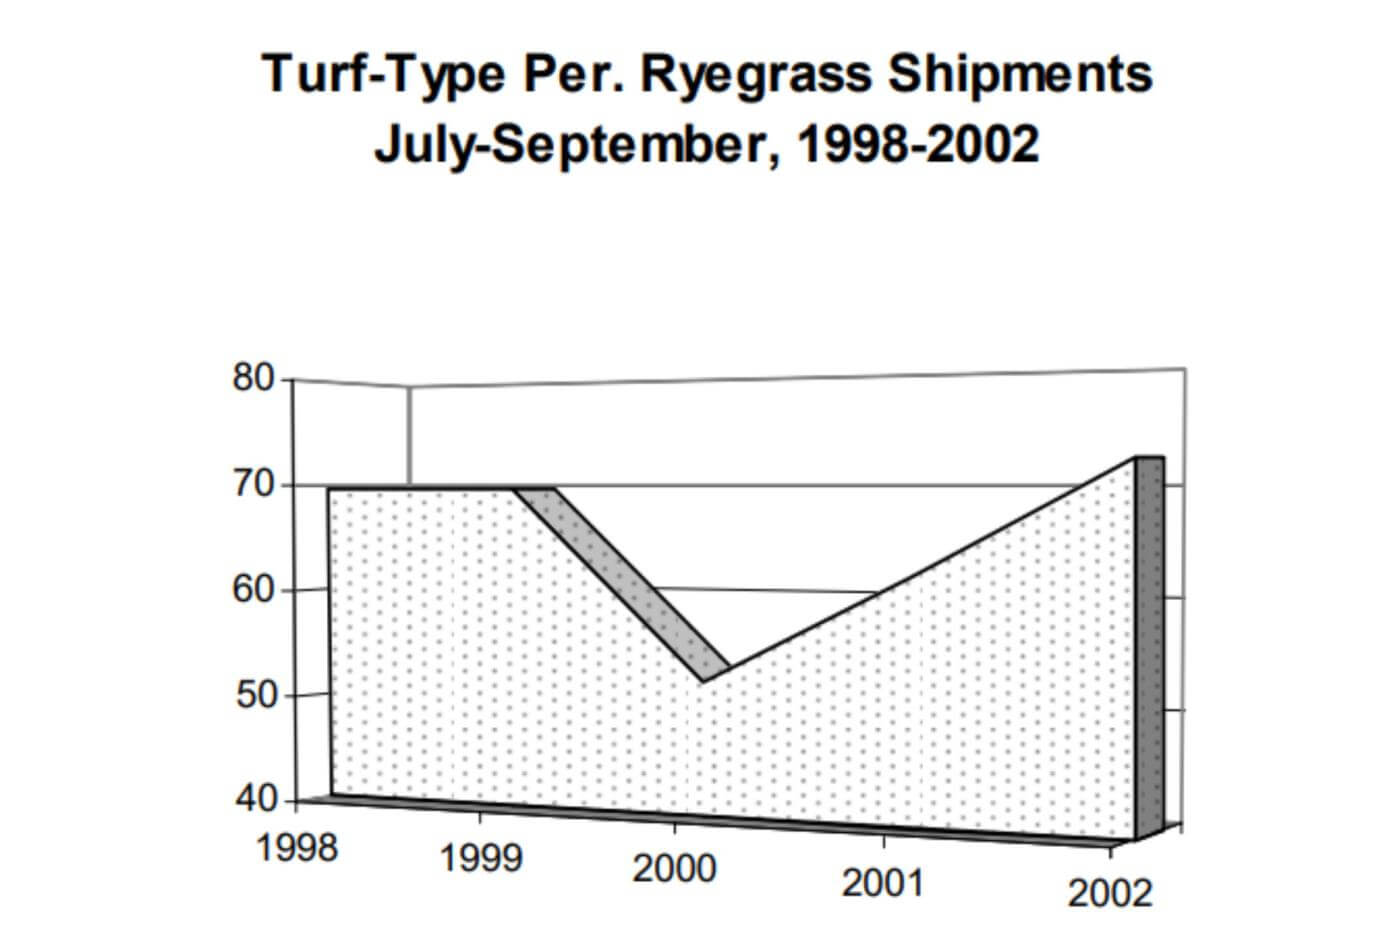 Graph of Turf-Type Perennial Ryegrass seed shipments - July thru Sept. 1998-2002